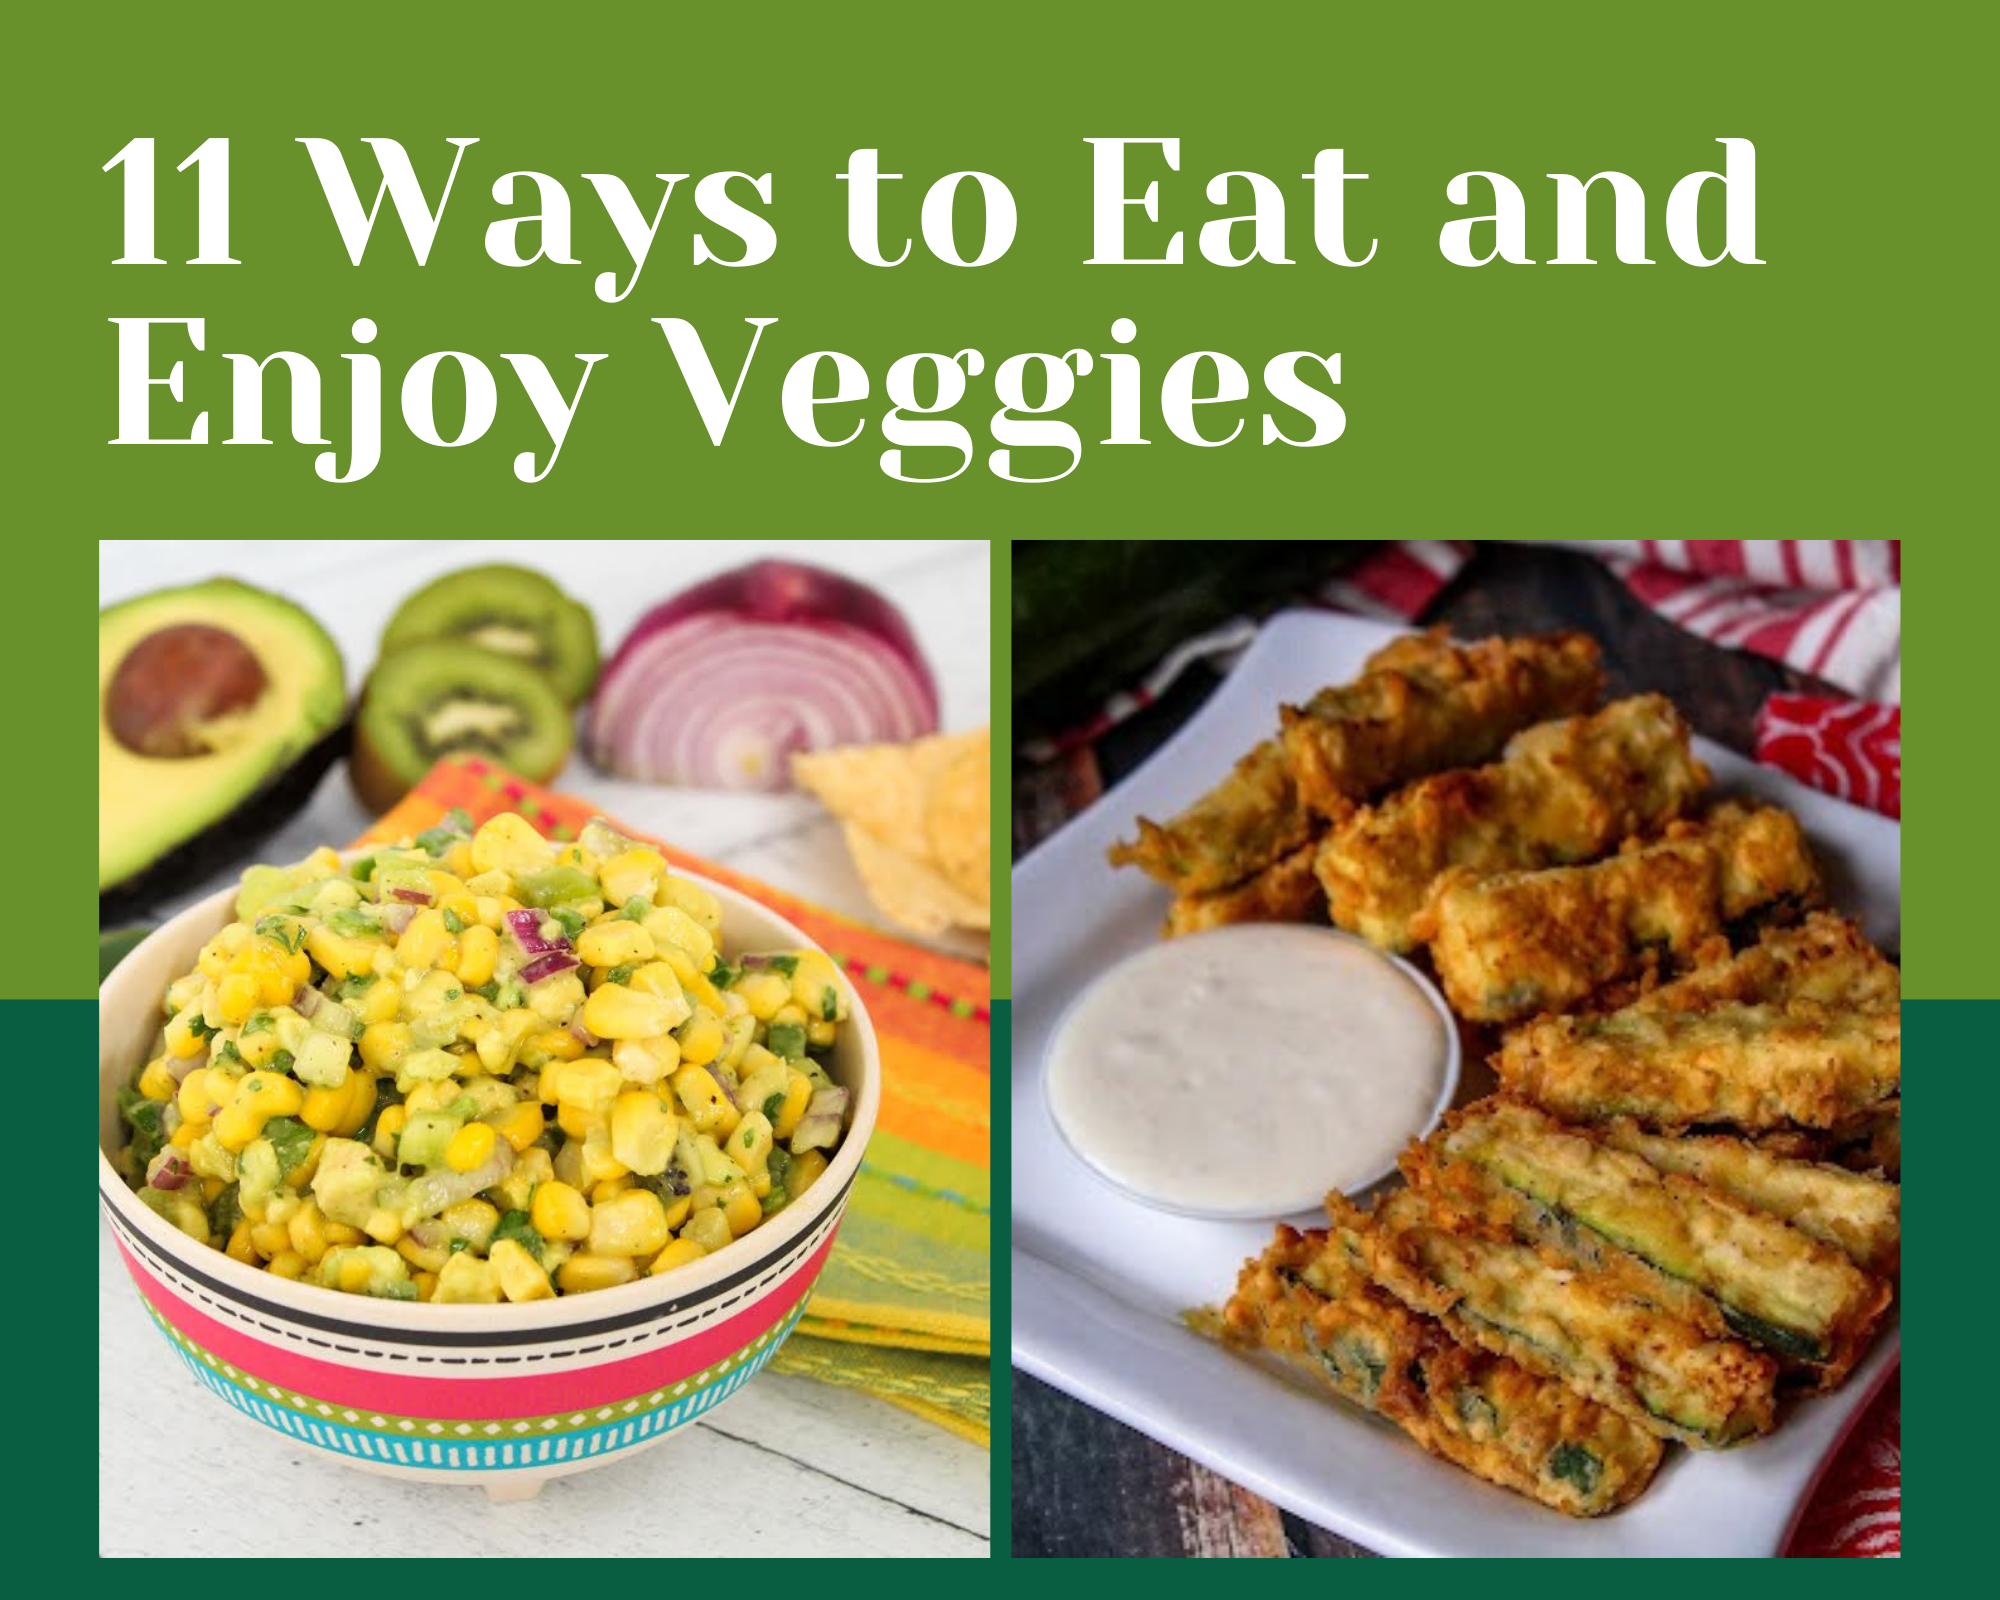 11 Ways to Eat and Enjoy Veggies